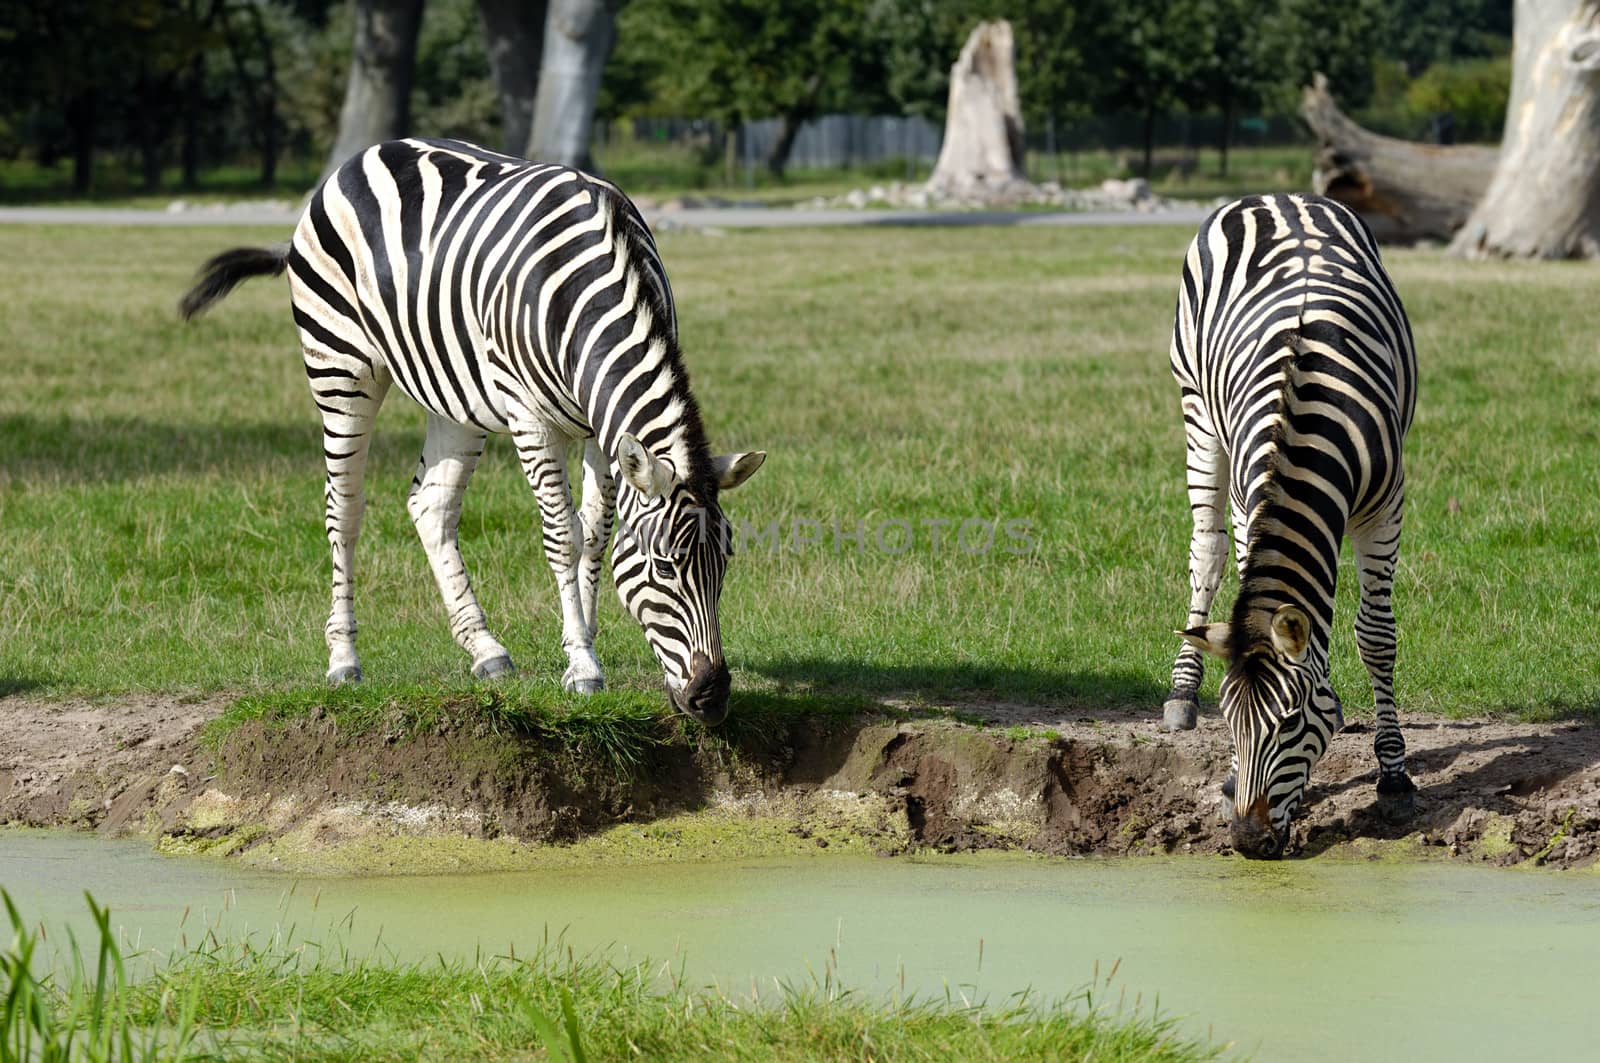 Zebras are dirnking water by cfoto